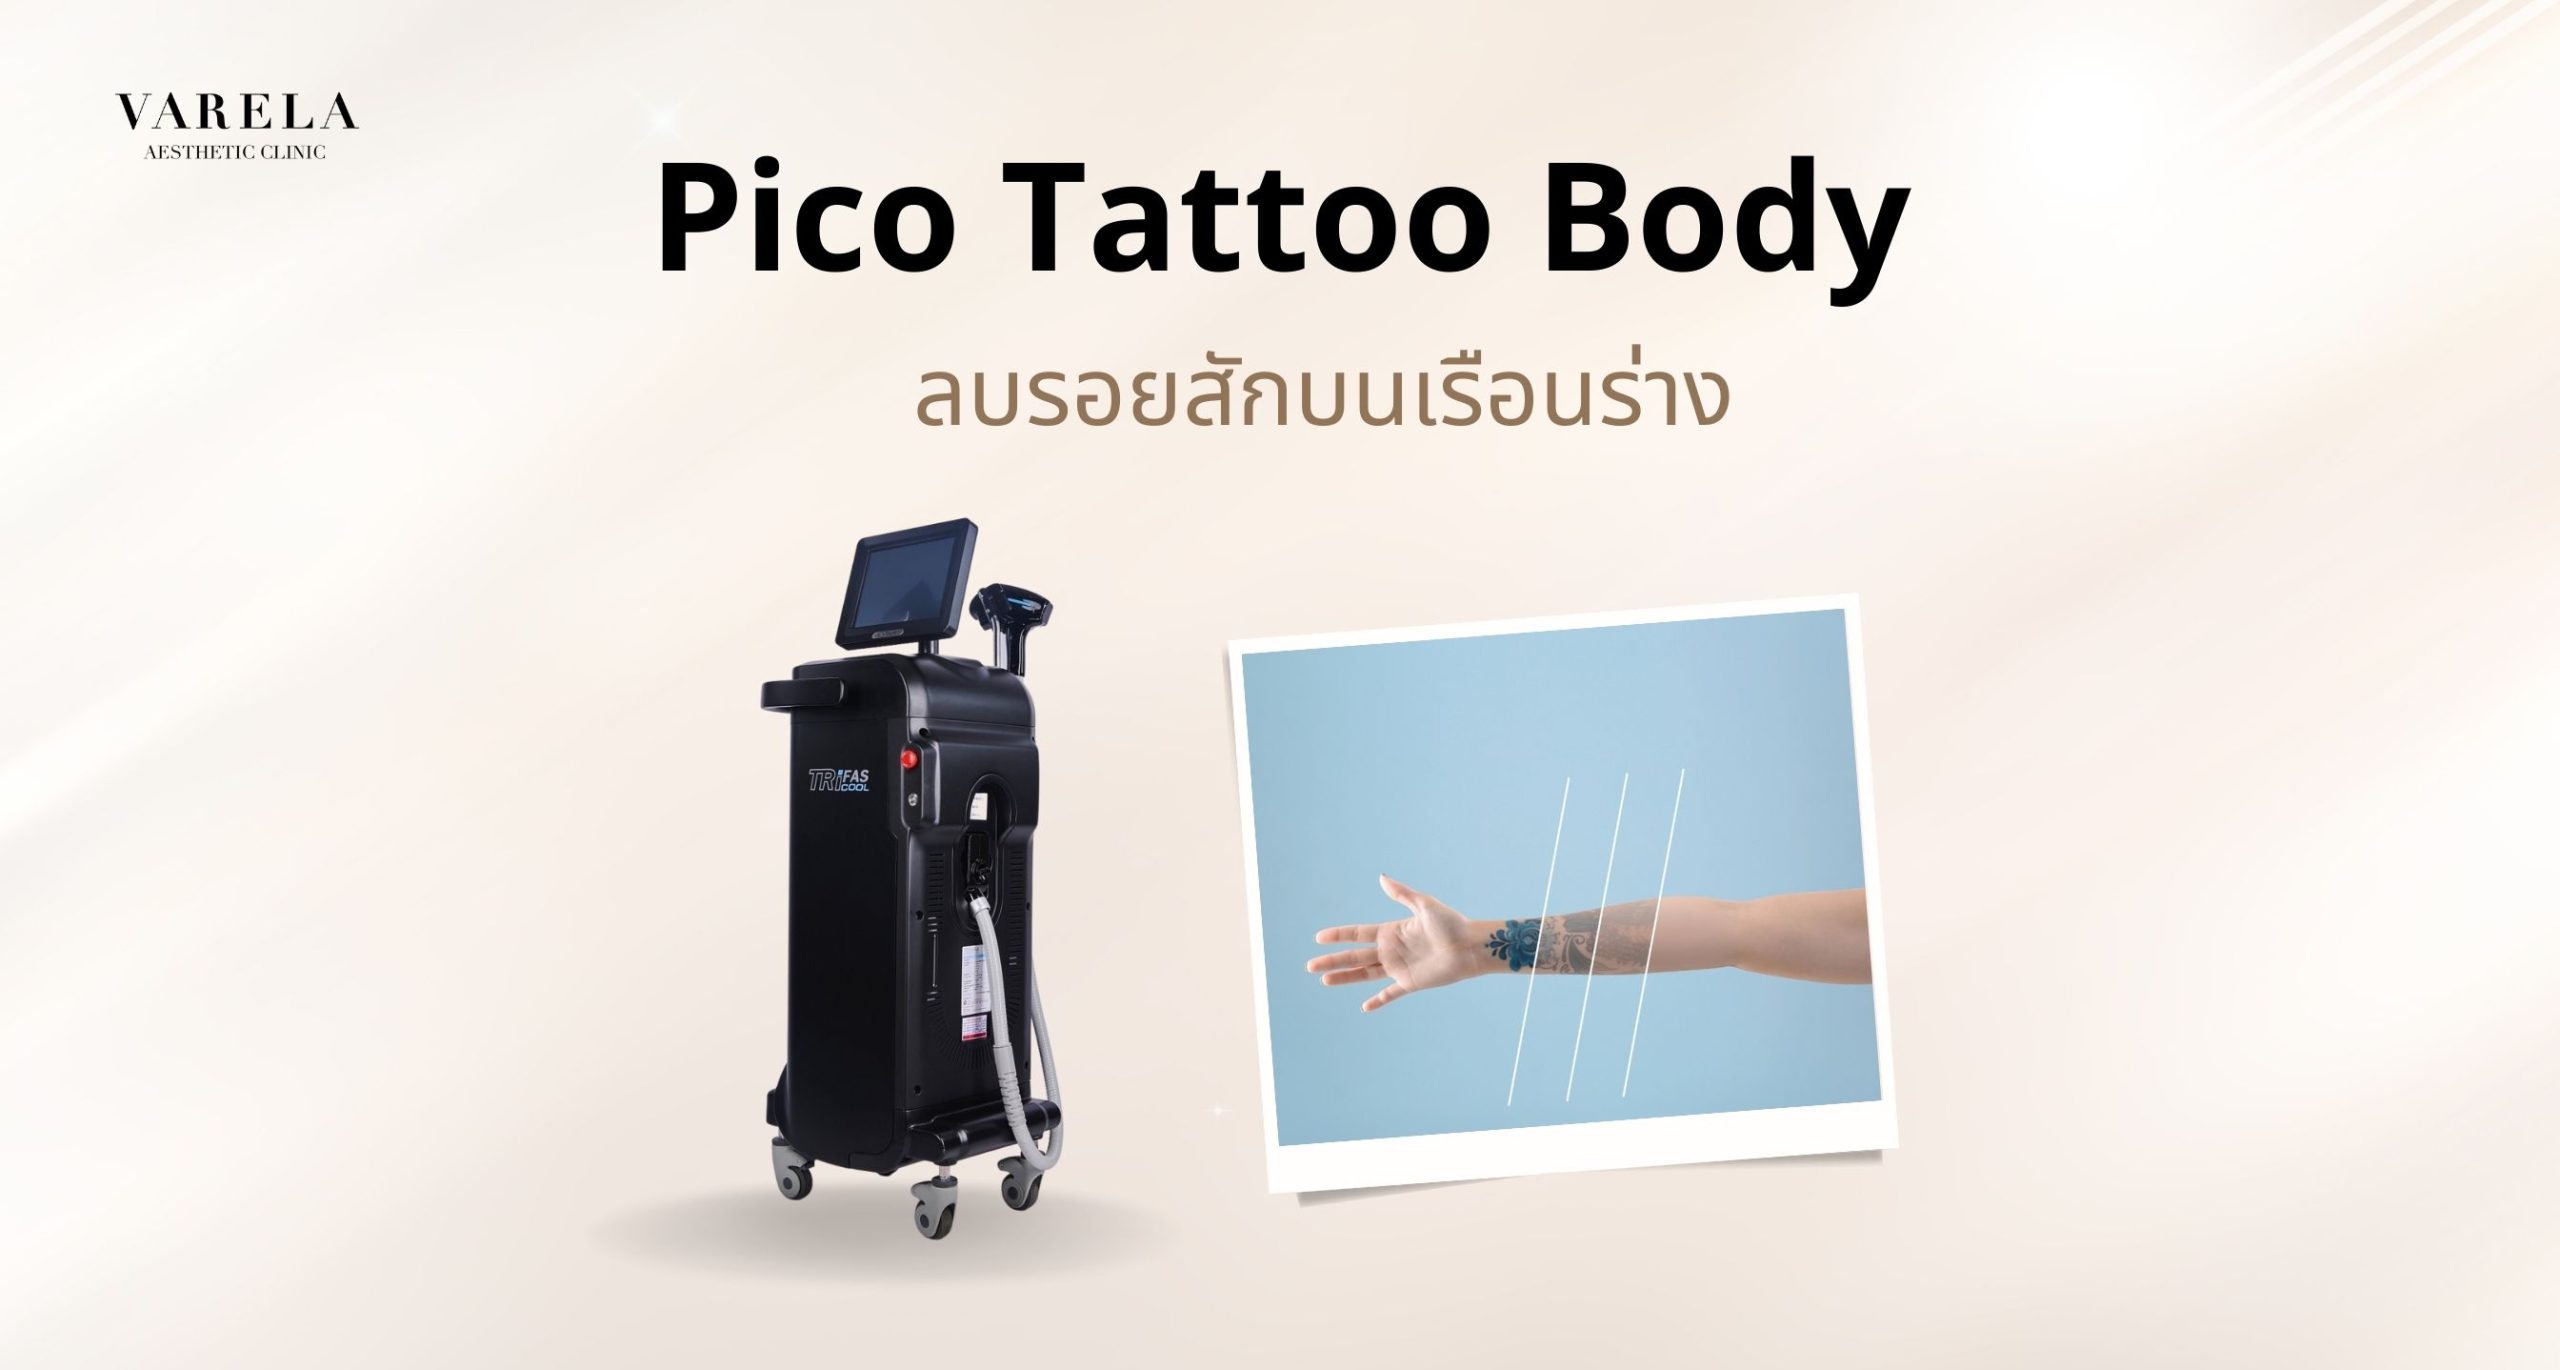 Pico tattoo Body